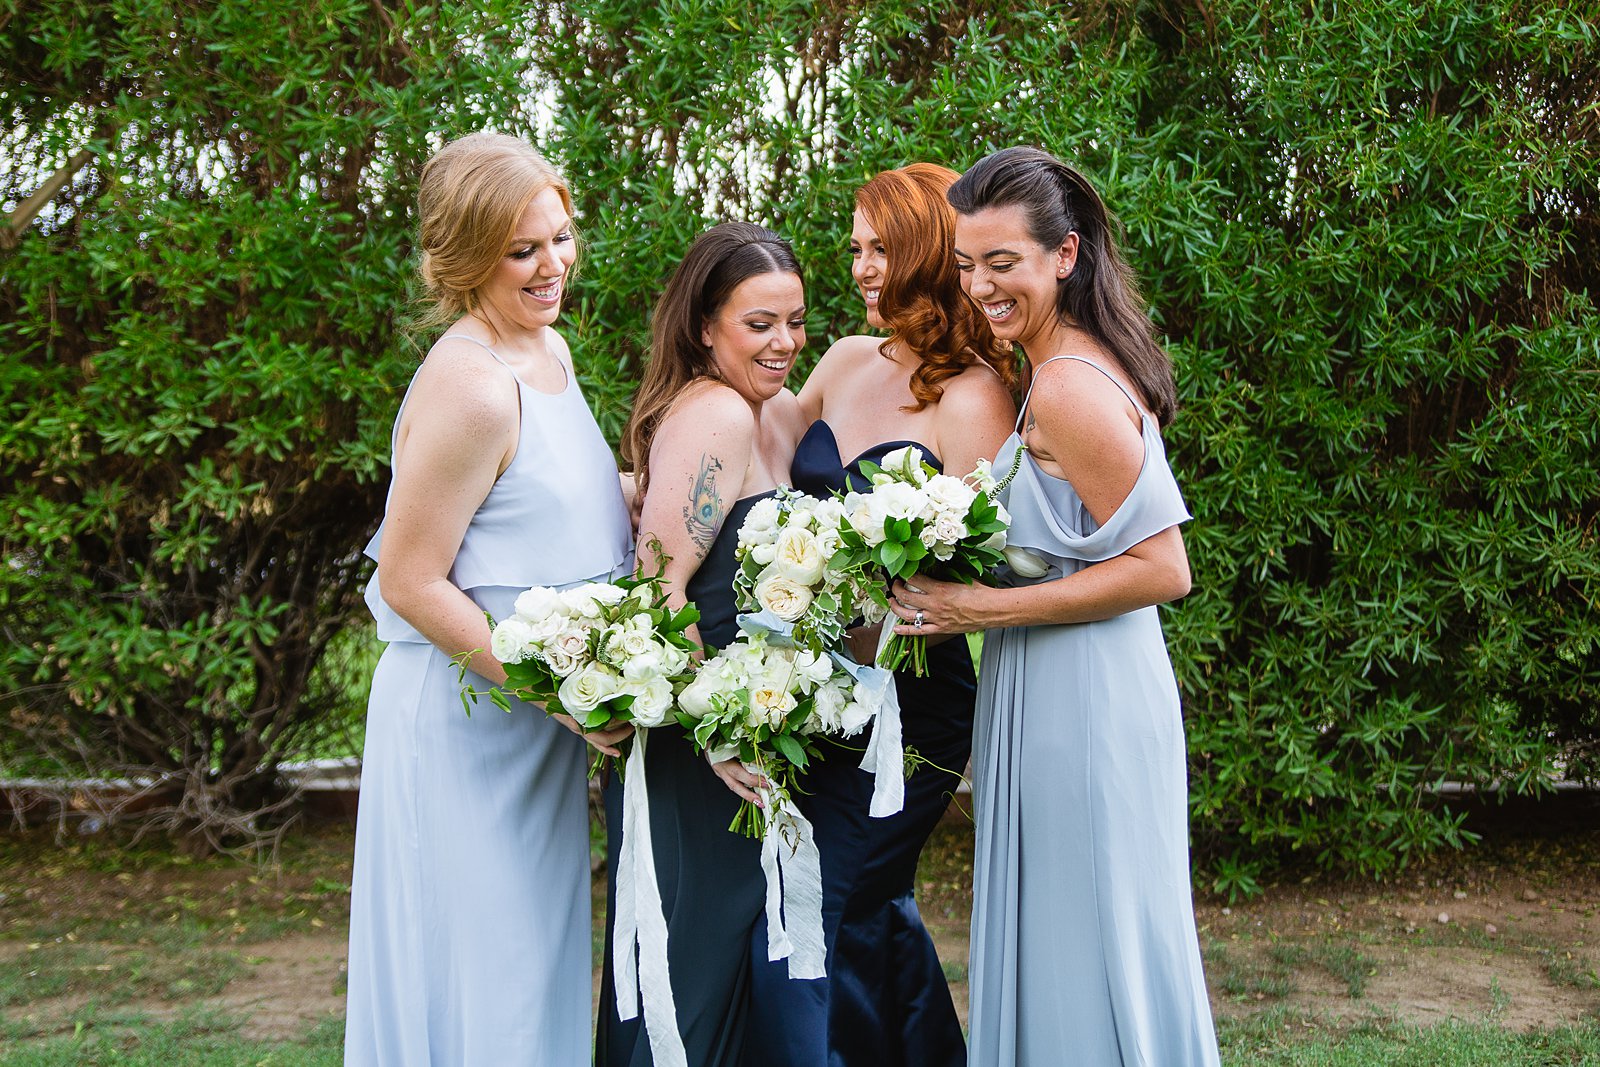 Bridesmaids laughing together at Gather Estate wedding by Phoenix wedding photographer PMA Photography.